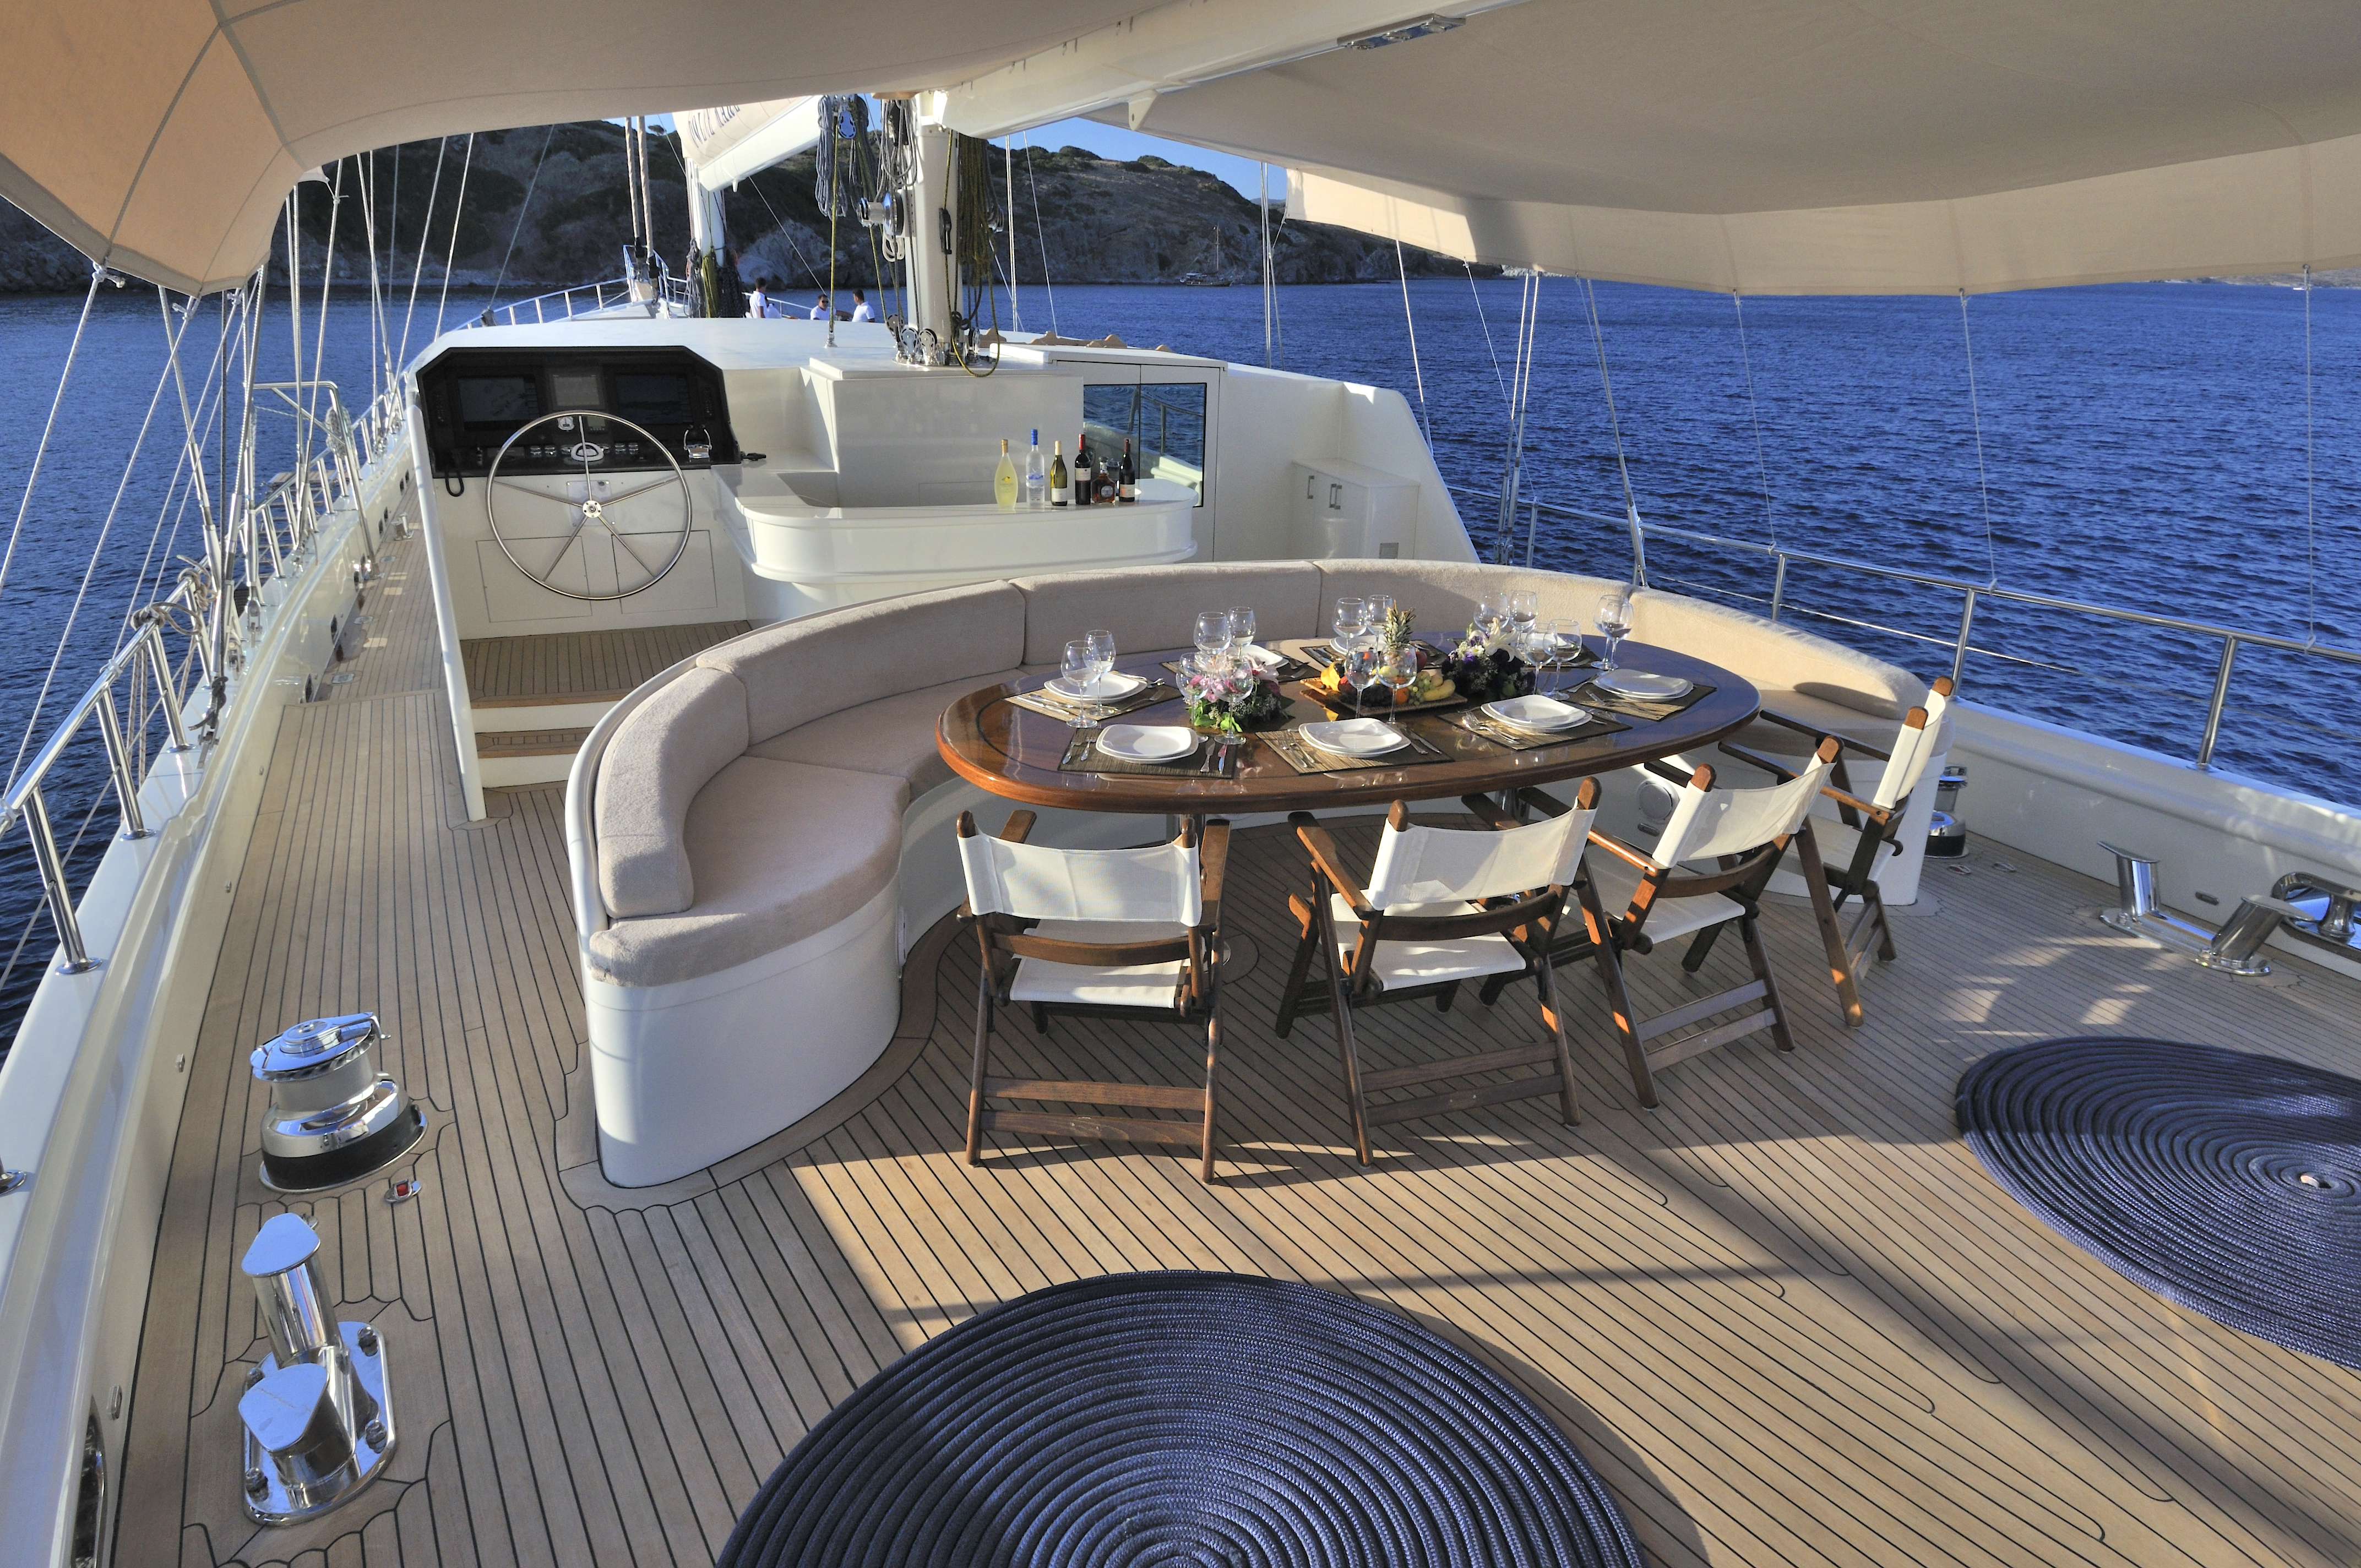 Палуба 12. Яхта 4 палубная. Яхта Luxury Yacht. Палуба парусной яхты. Средиземноморский кокпит на яхте.